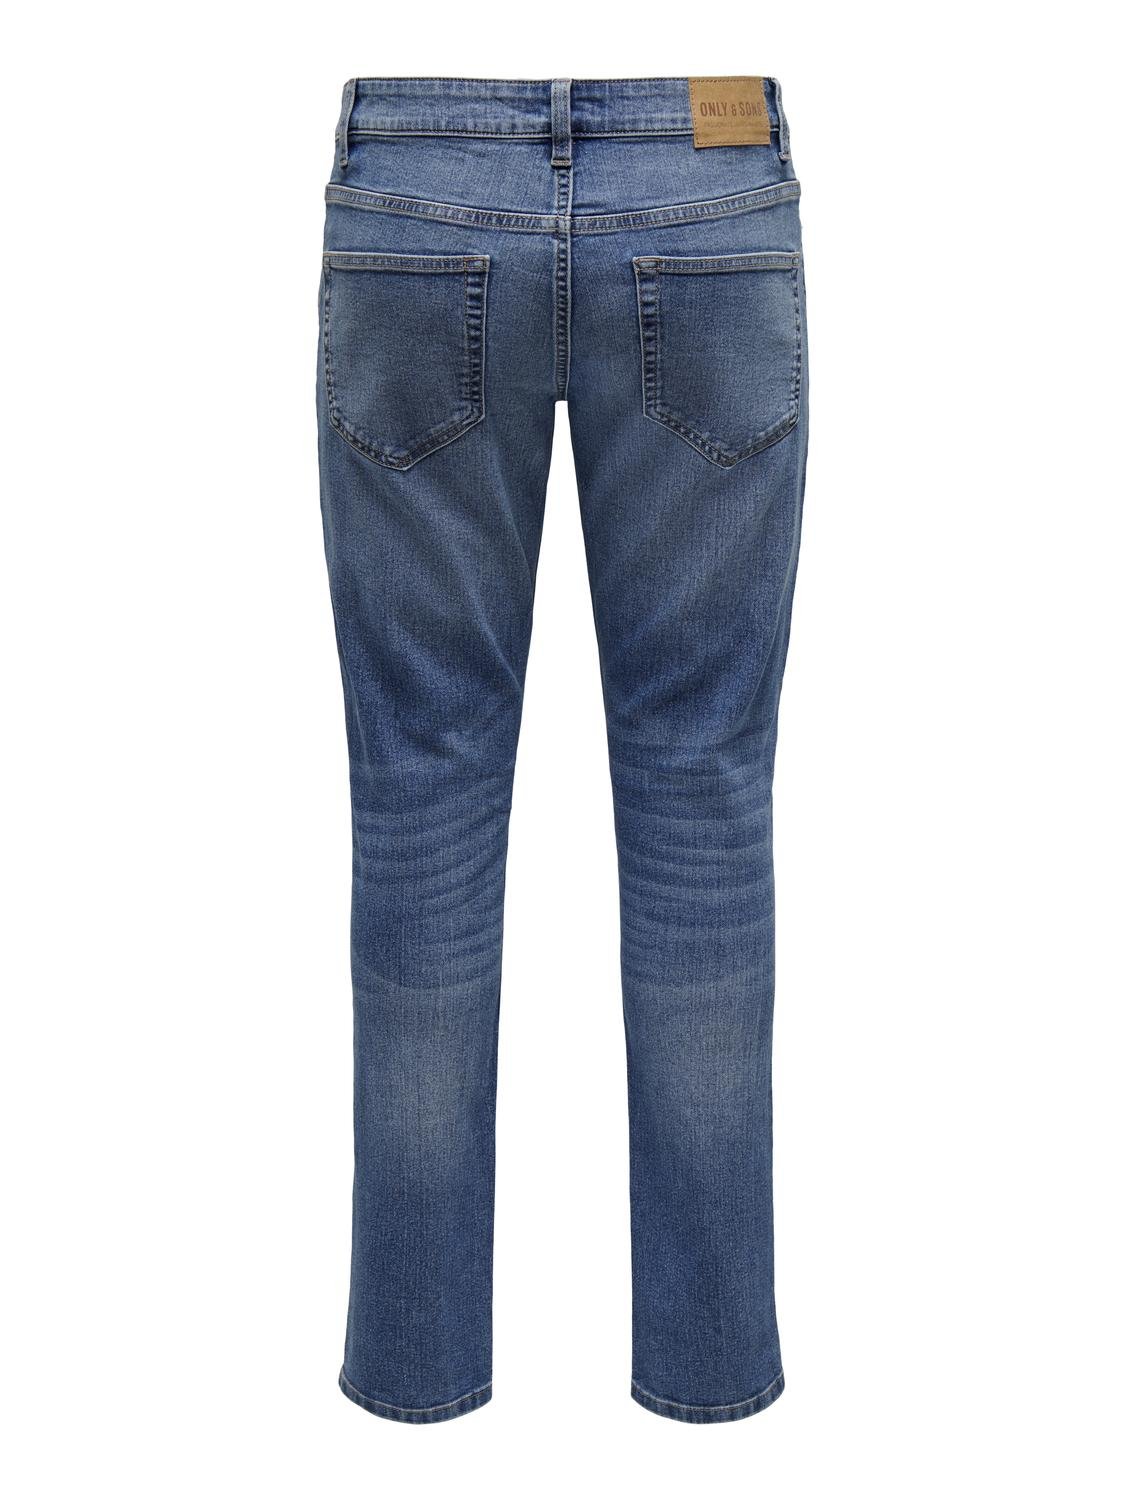 ONLY & SONS Jeans Slim Fit Taille moyenne -Light Medium Blue Denim - 22027899